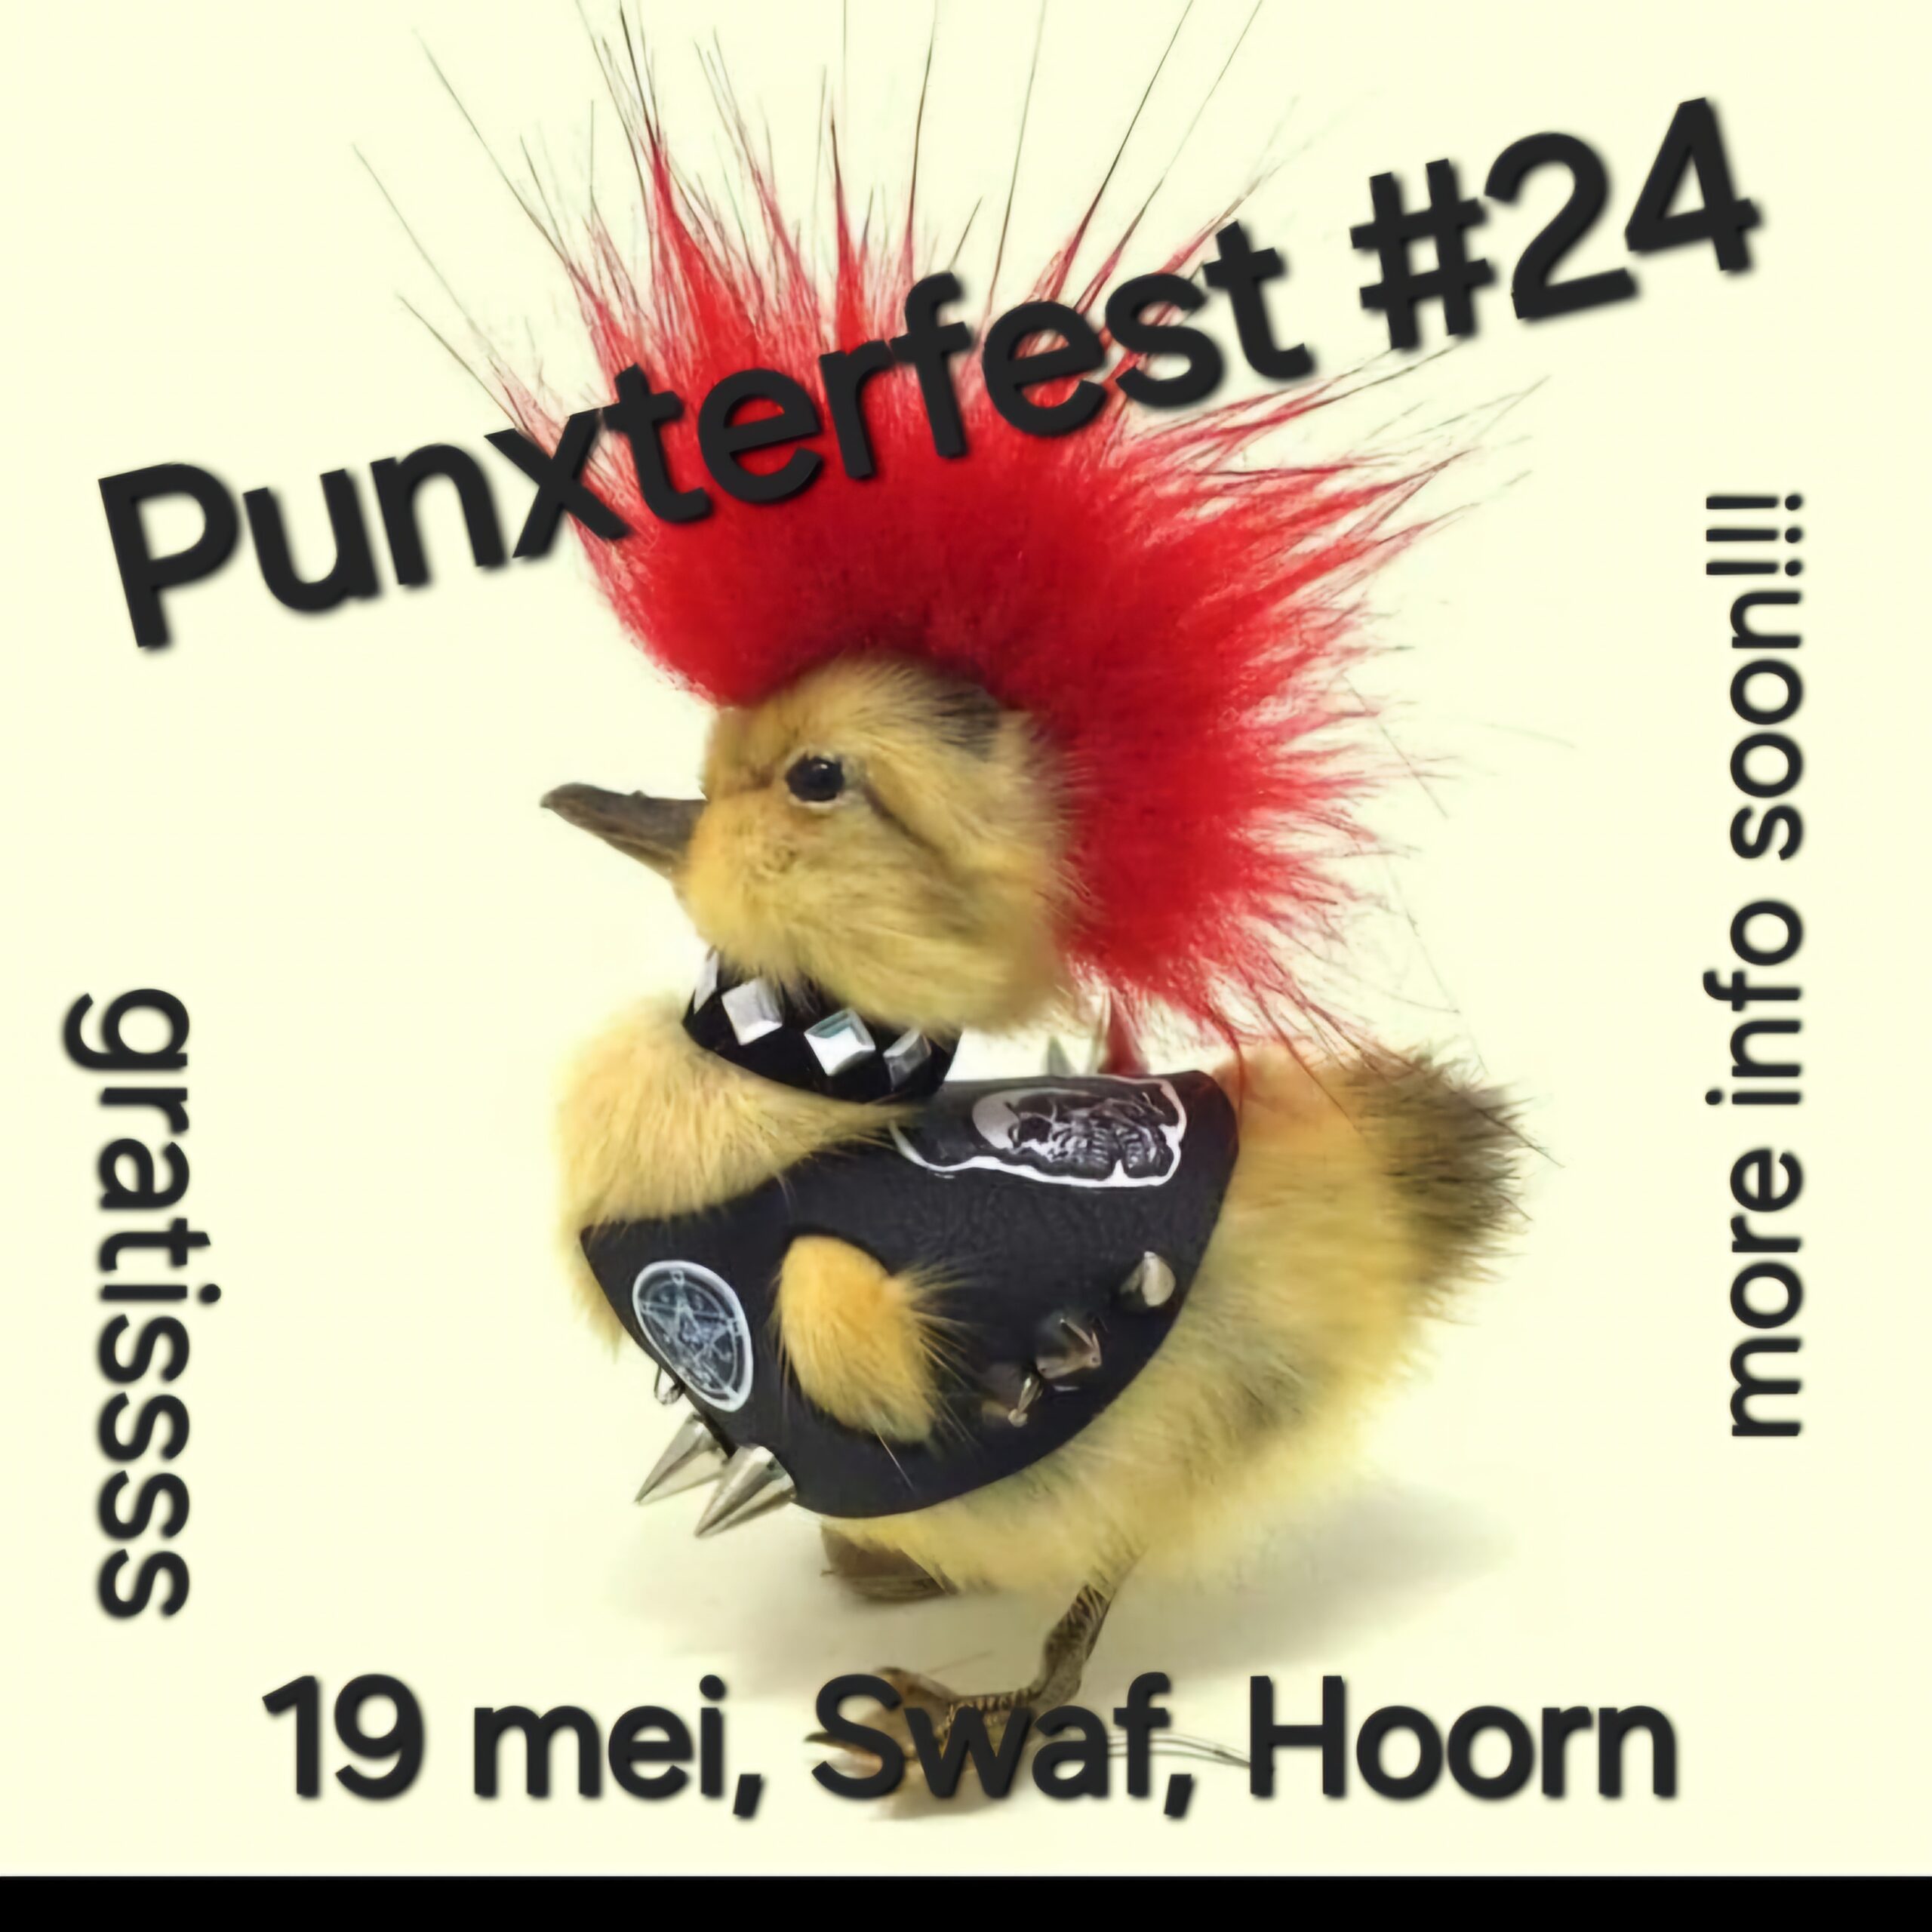 Punxterfest #24